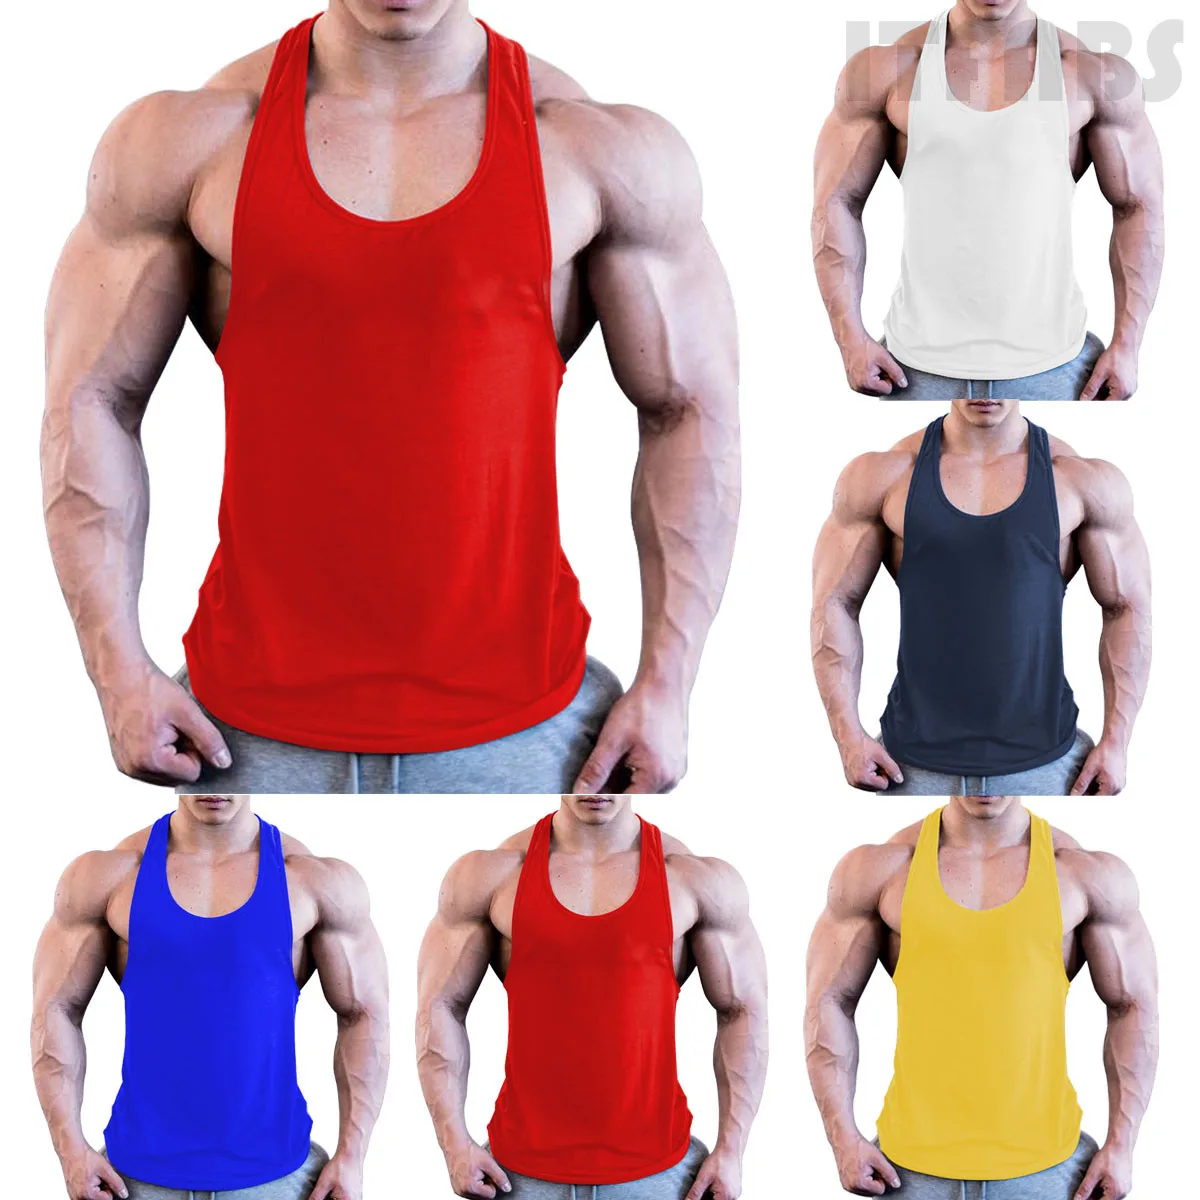 Crown Designs Hulk Face Bodybuilding Weight-training Sports Stringer Vest Top with Y Back Racerback Fit for Men & Teens 